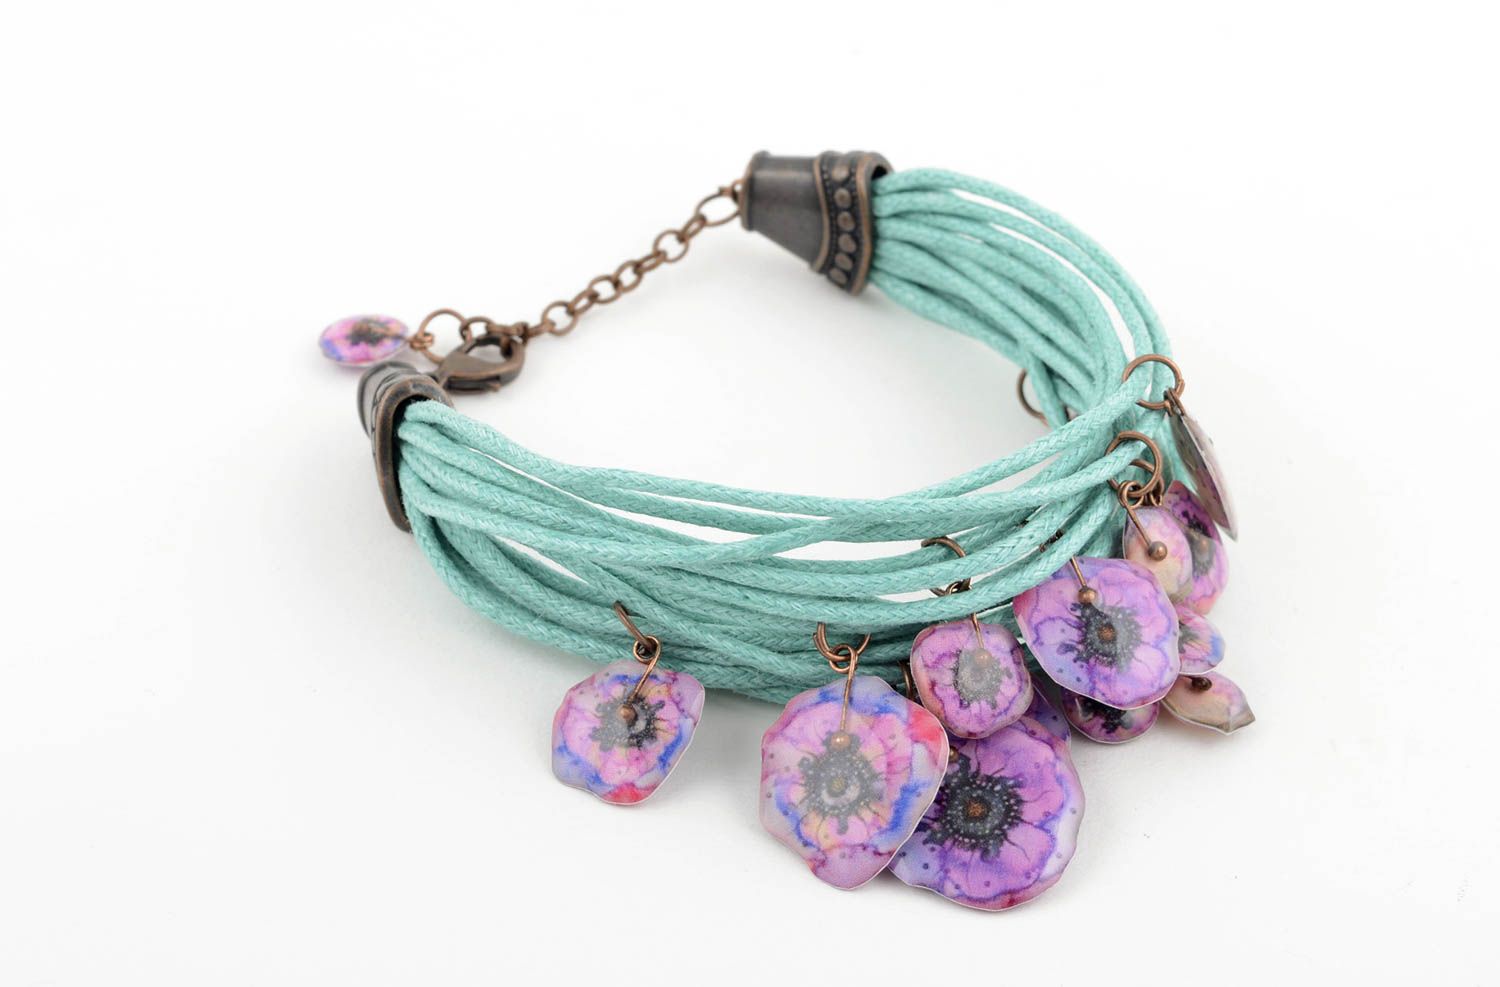 Unusual handmade woven cord bracelet wrist bracelet designs accessories for girl photo 2